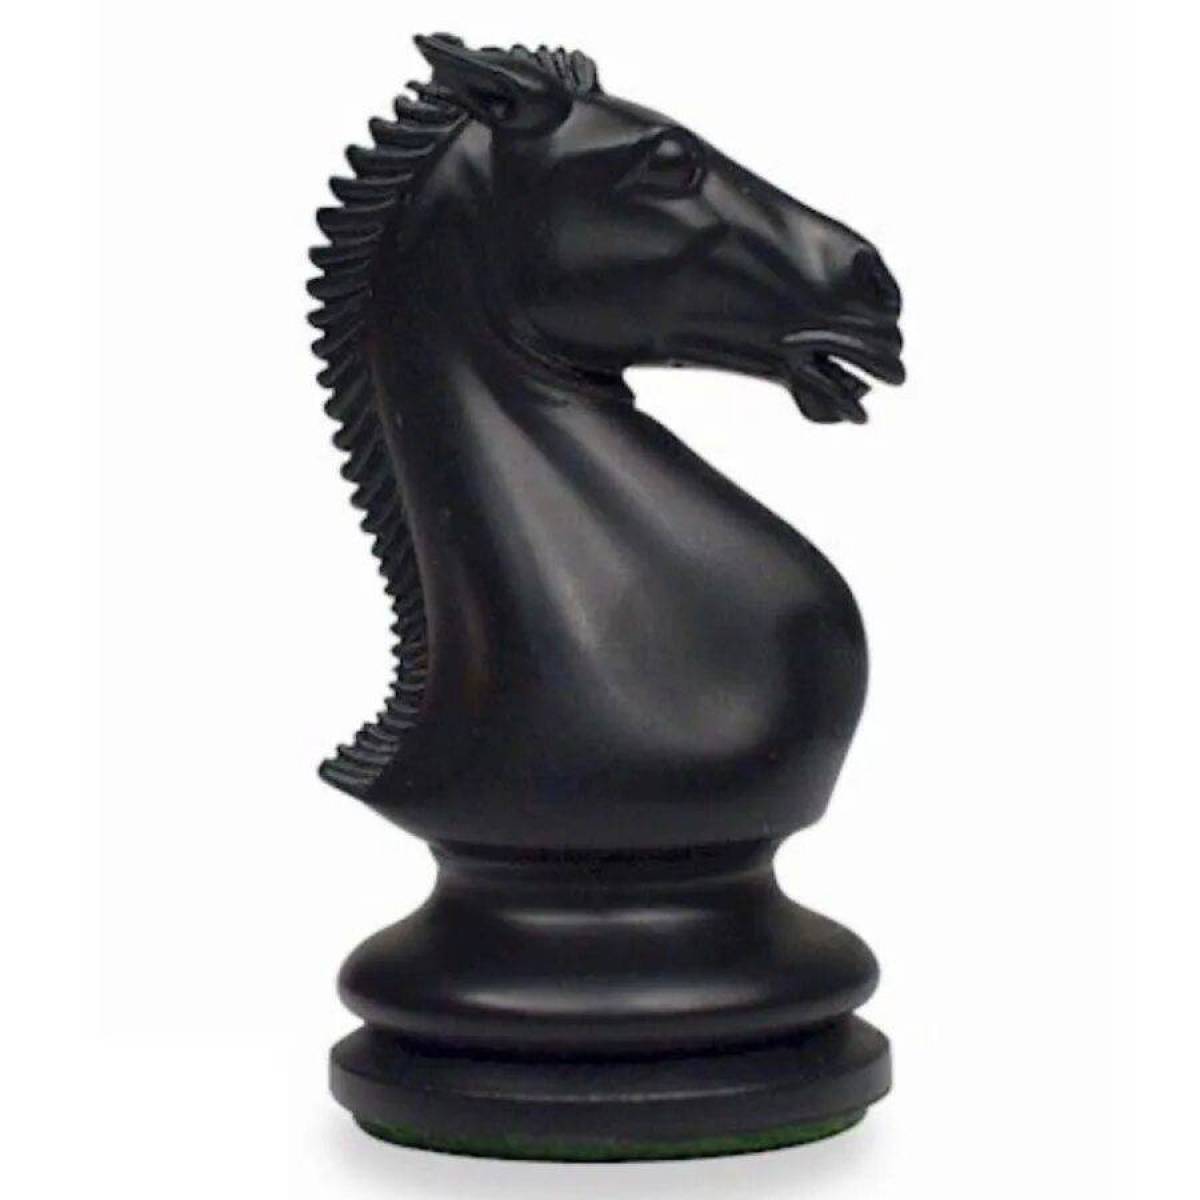 2 коня шахматы. Конь шахматы спереди. Шахматная фигура конь. Шахматный конь черный. Фигурка коня шахматы.